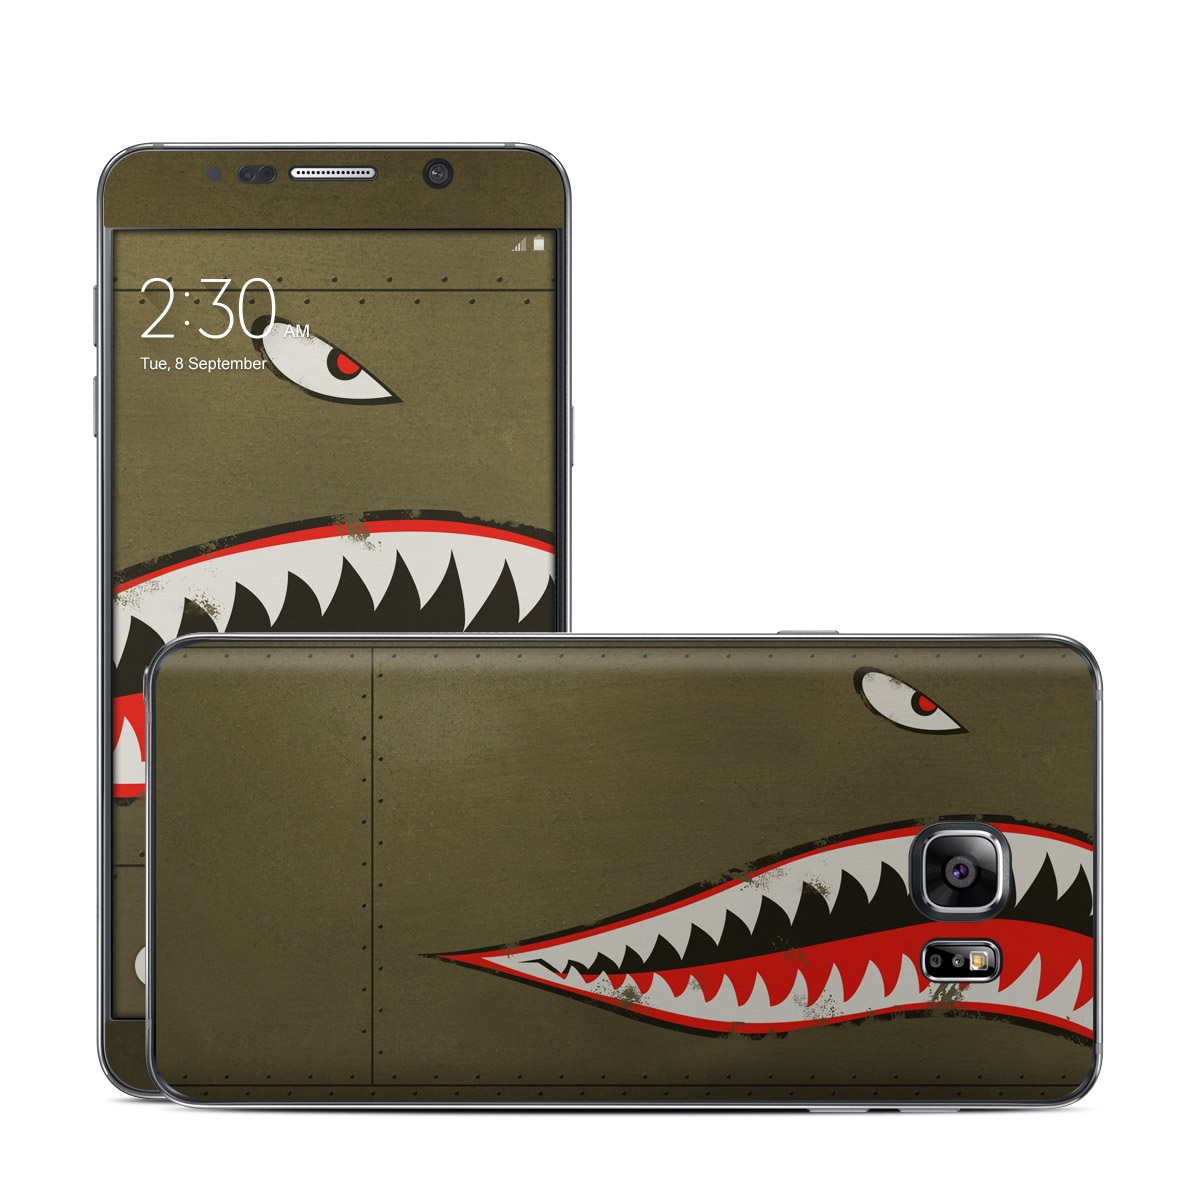 Samsung Galaxy Note 5 Skin - USAF Shark (Image 1)